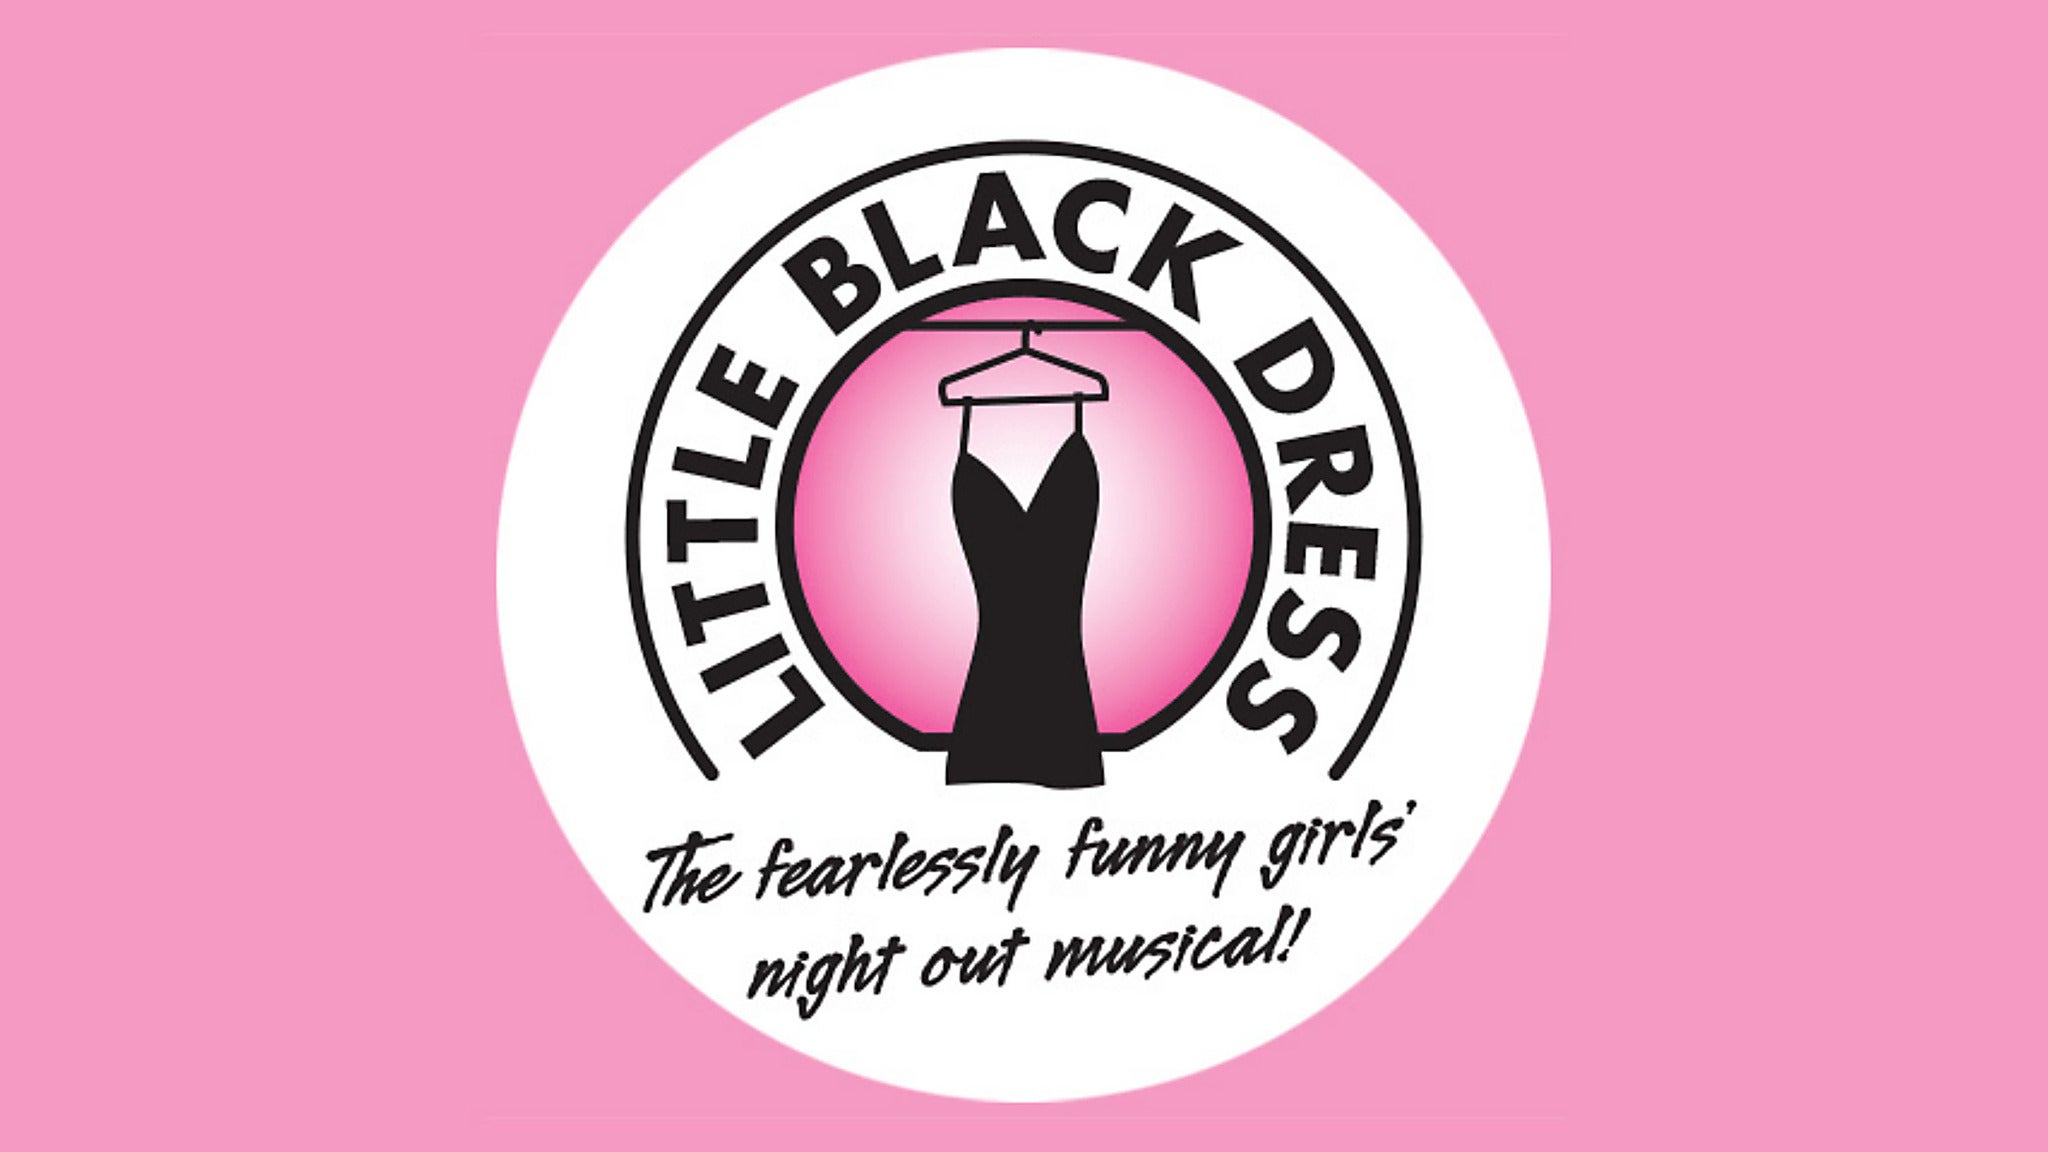 Little Black Dress in Burnsville promo photo for Venue presale offer code